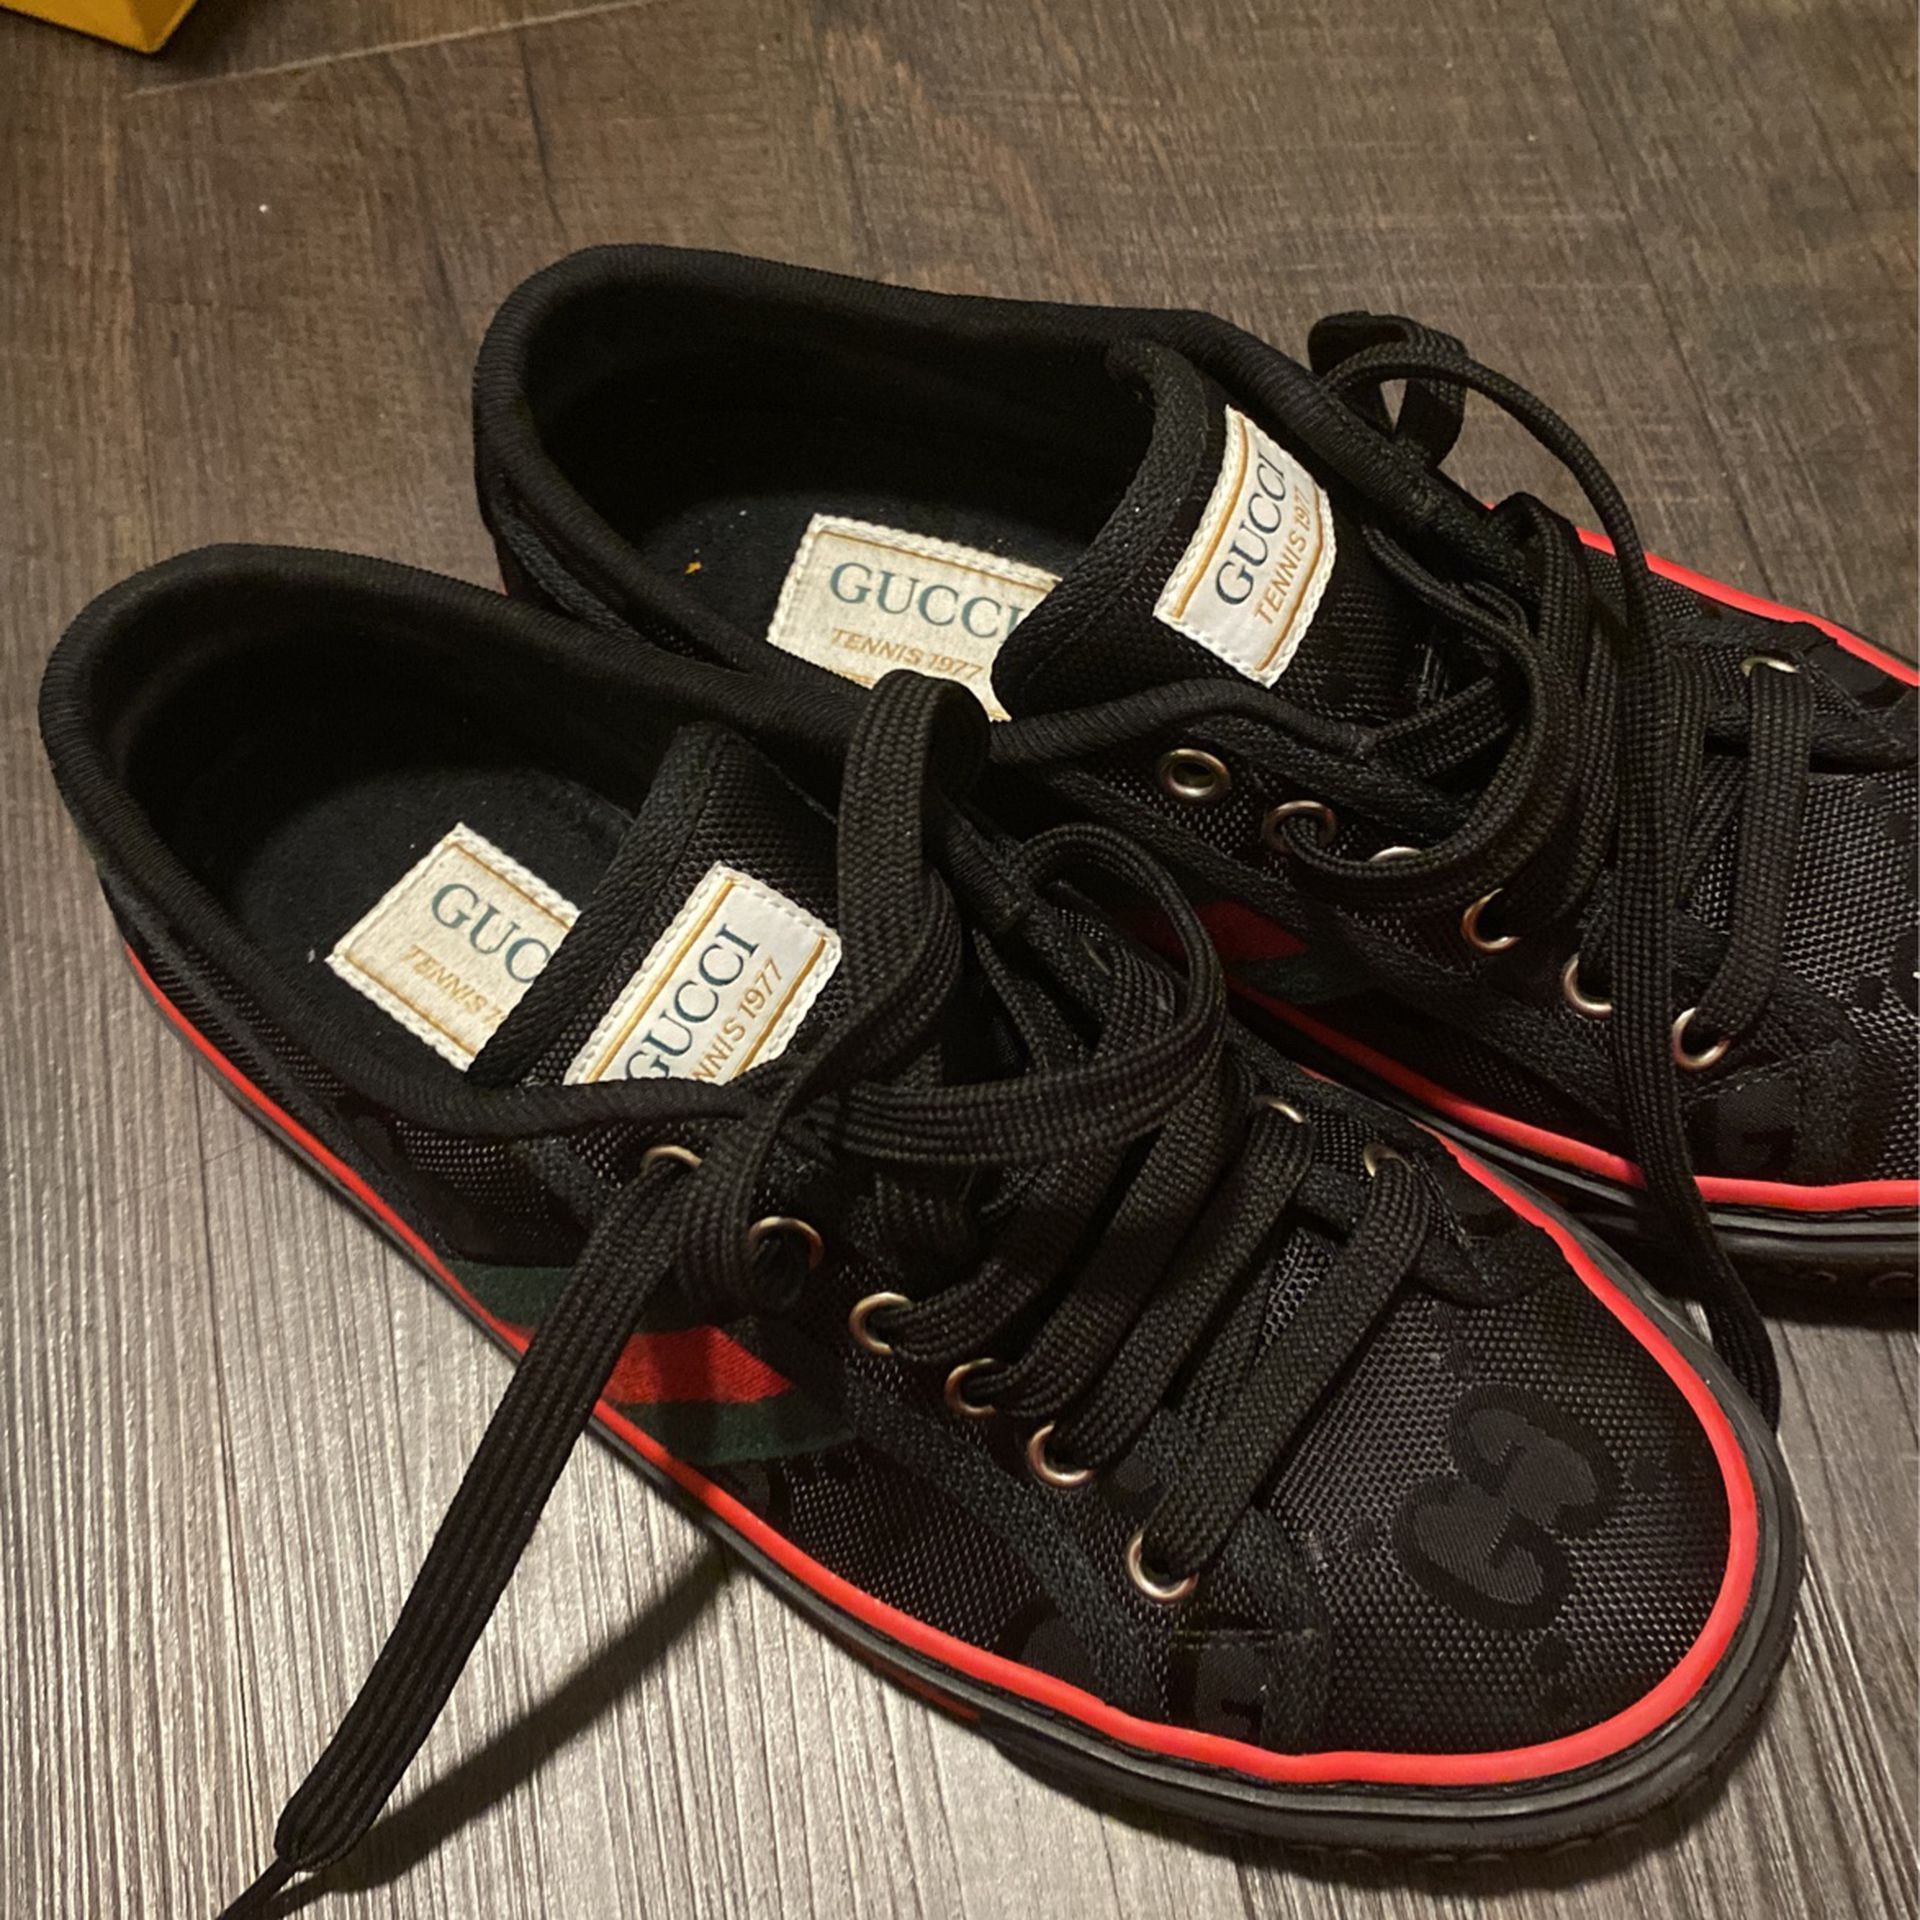 Gucci’s Shoes 